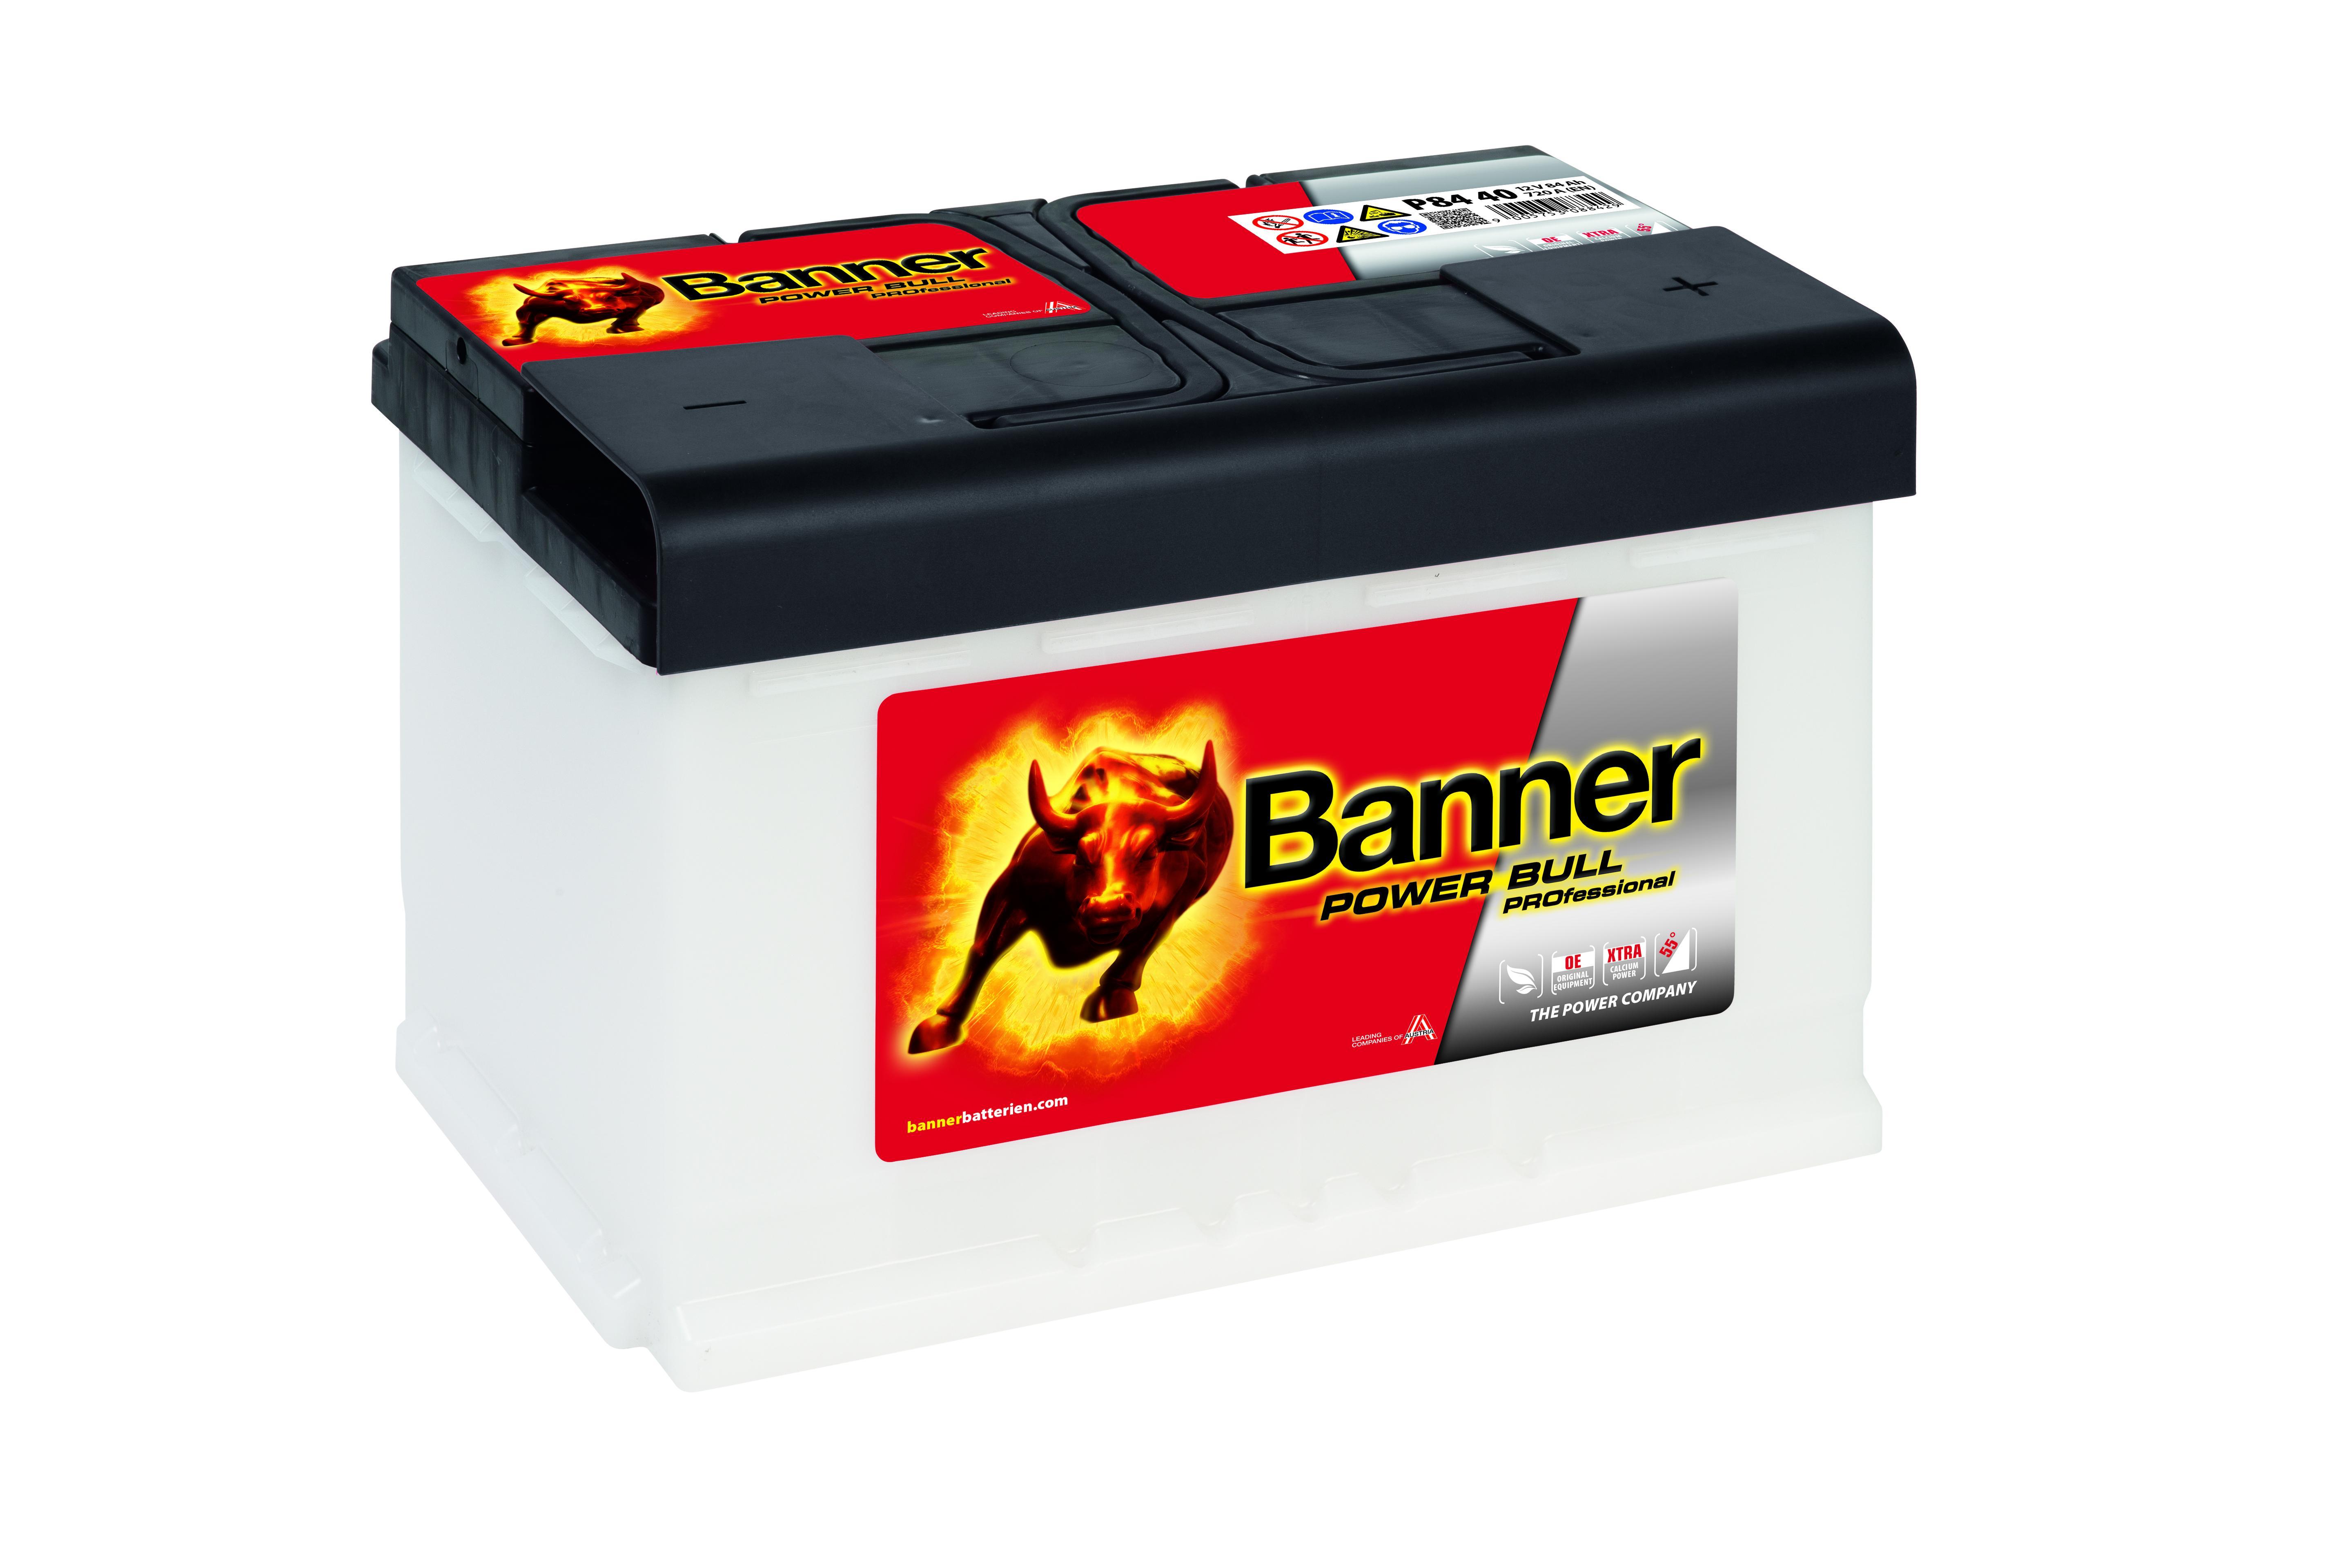 Banner Power Bull Professional P8440 - 84Ah, Batteries